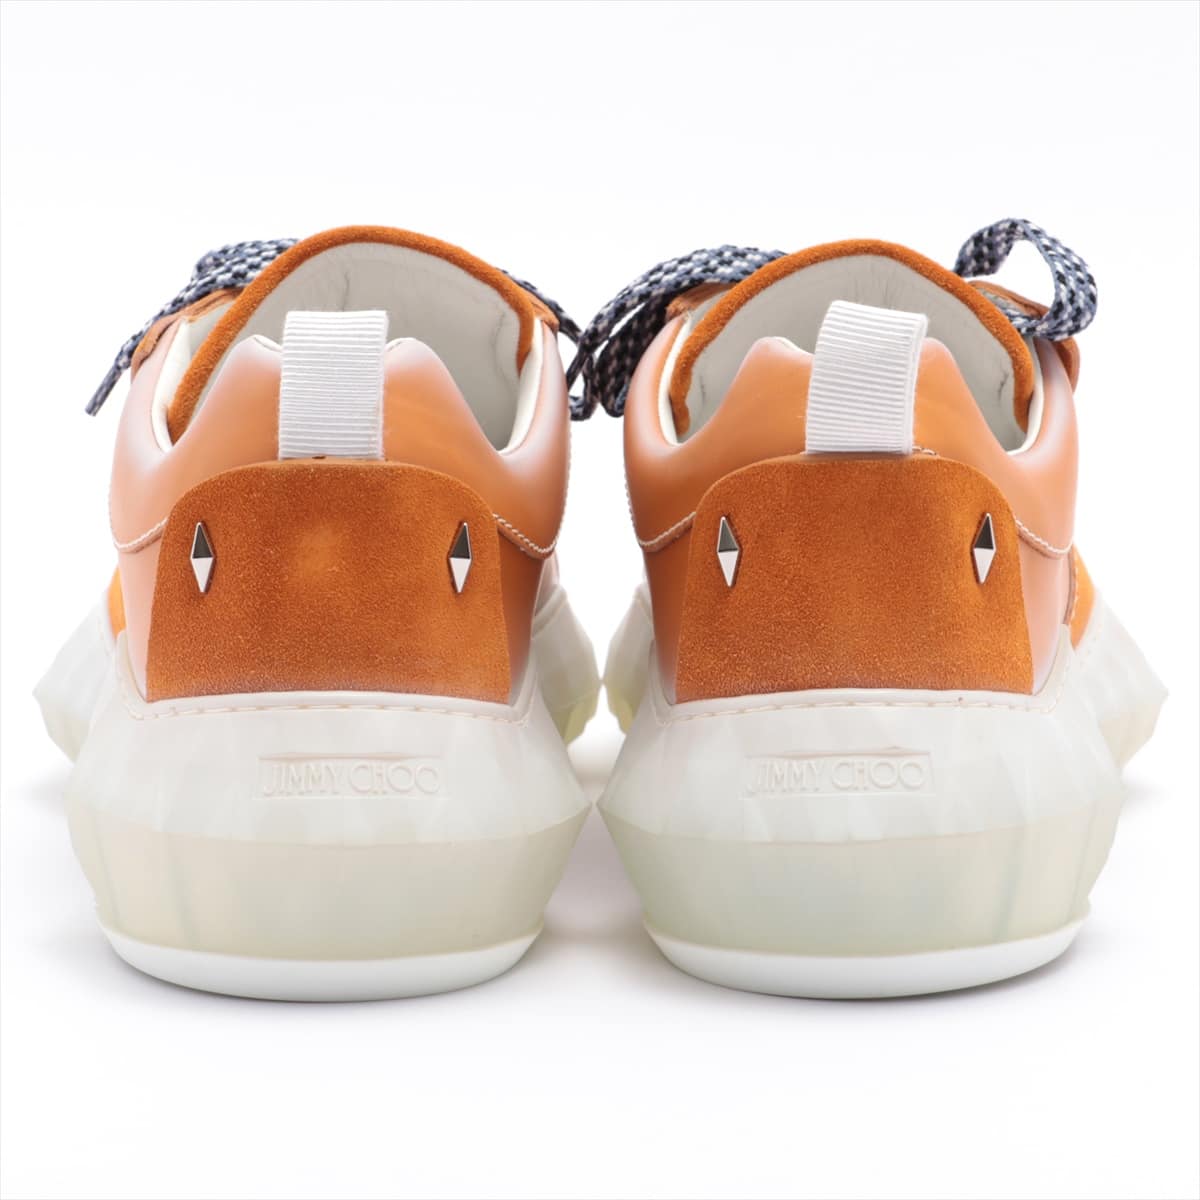 Jimmy Choo Leather & suede Sneakers 42 Men's Orange Diamond Studs